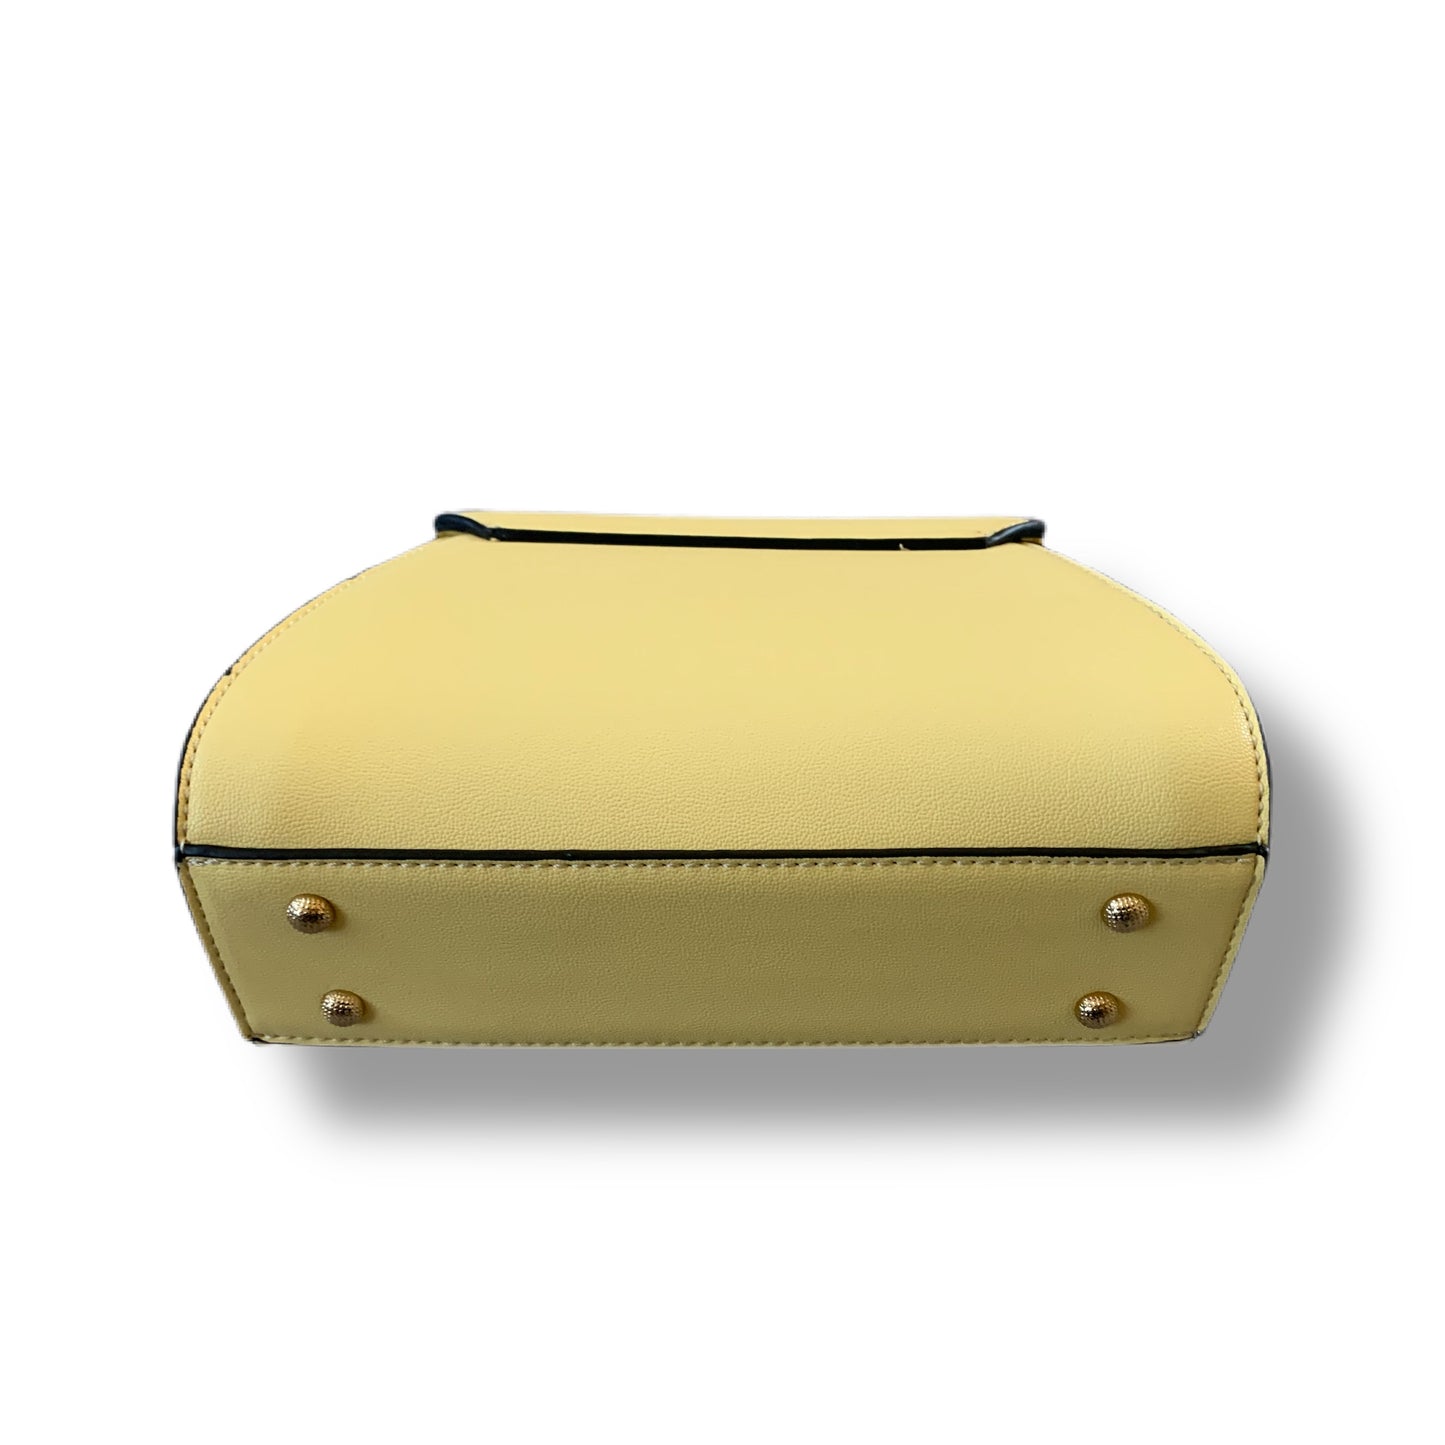 Yellow Crossbody bag with golden clutch